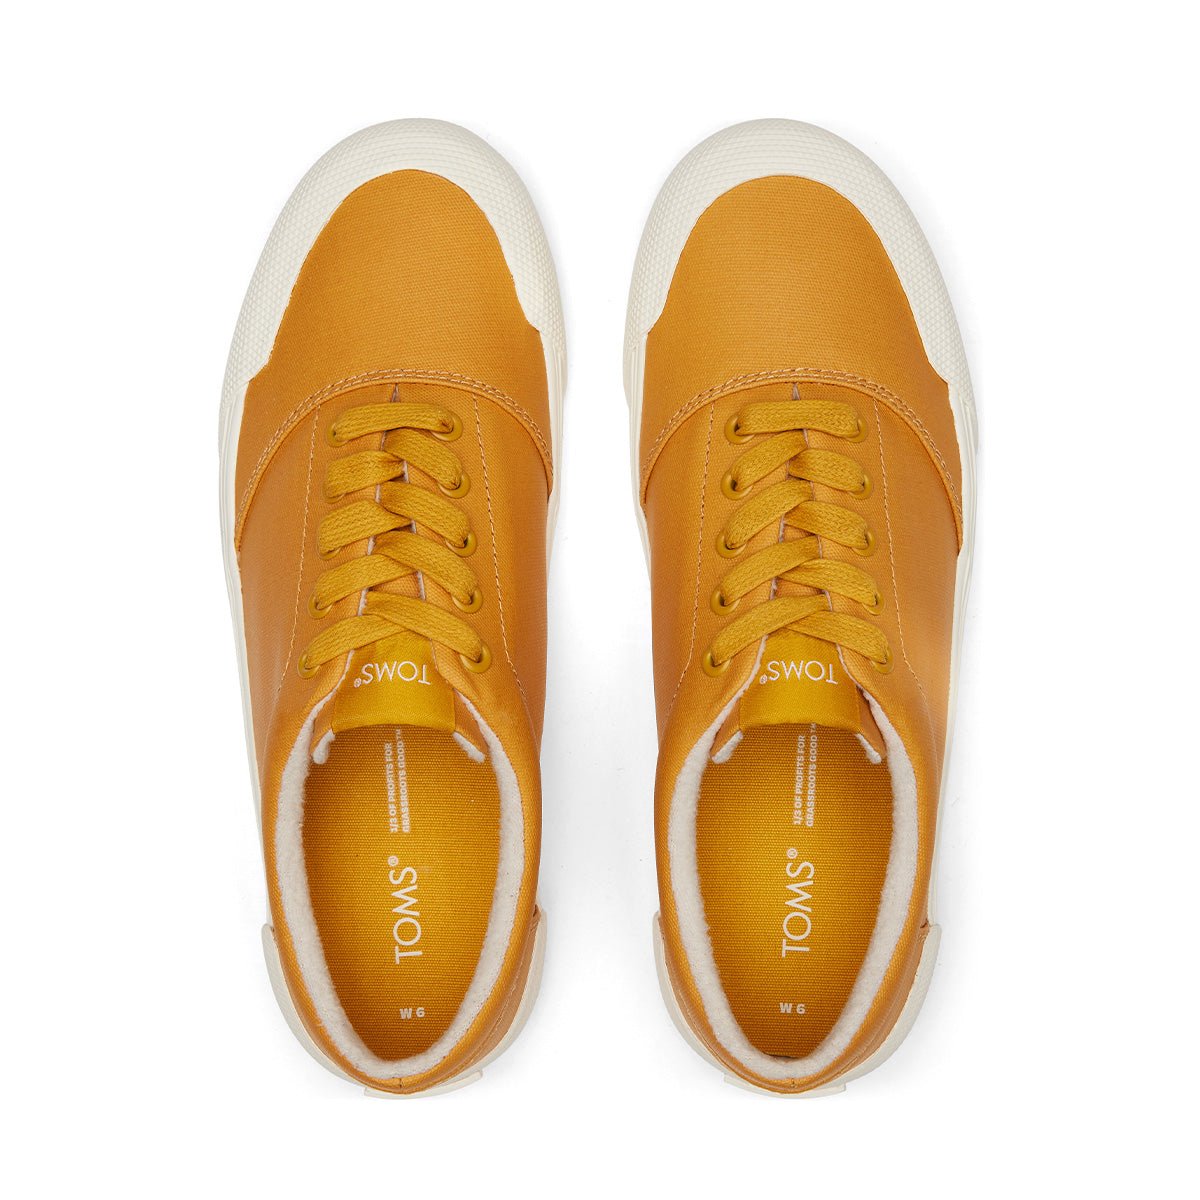 TOMS Sneakers  Alpargata Fenix Lace up  Women - Gold Yellow Matte